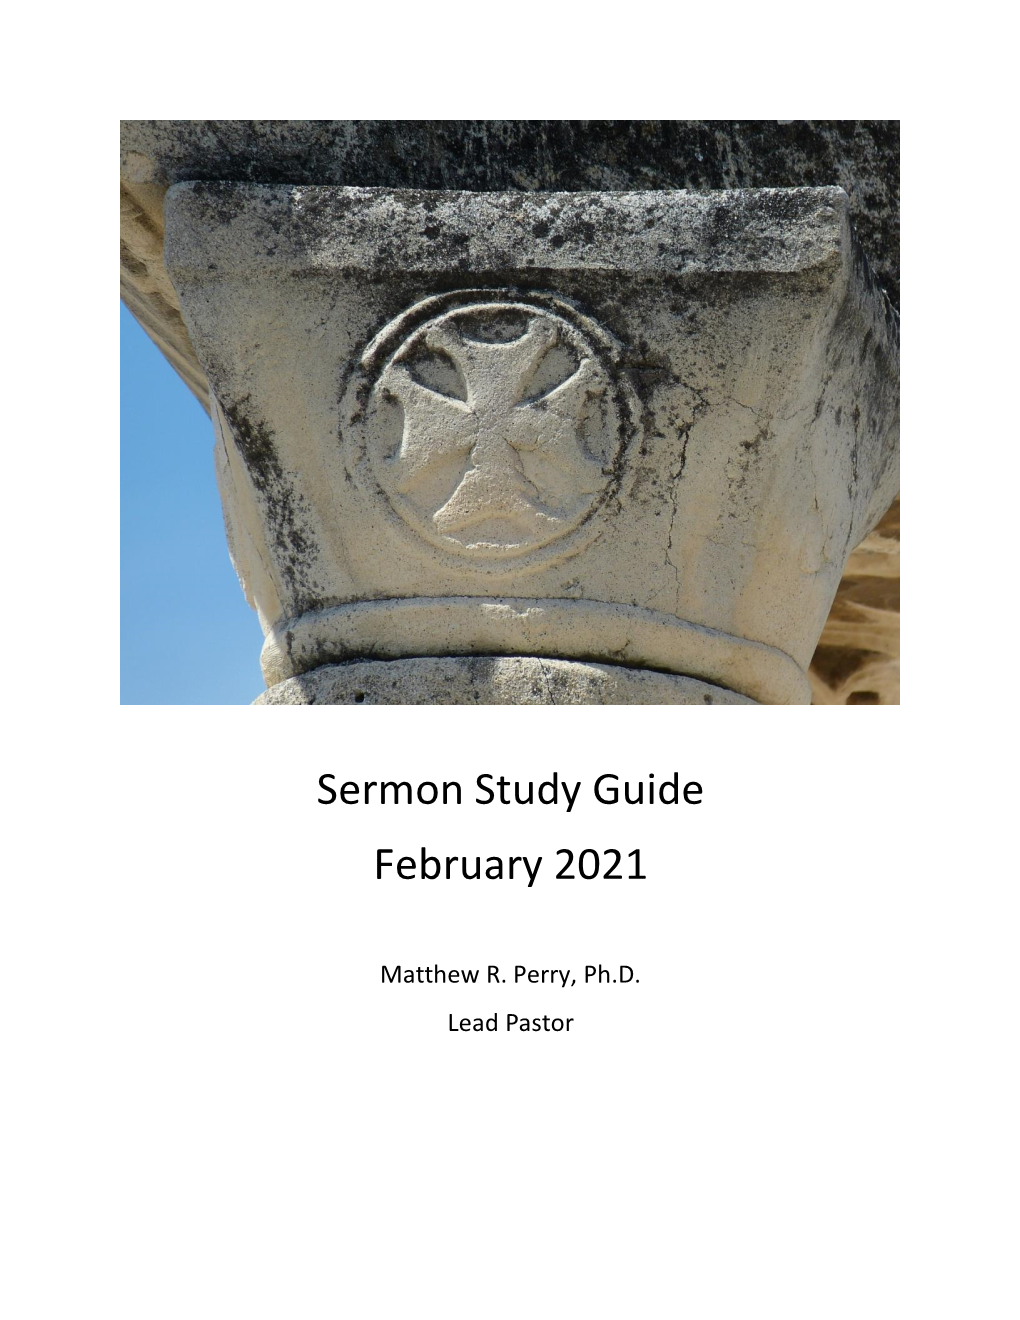 Sermon Study Guide February 2021